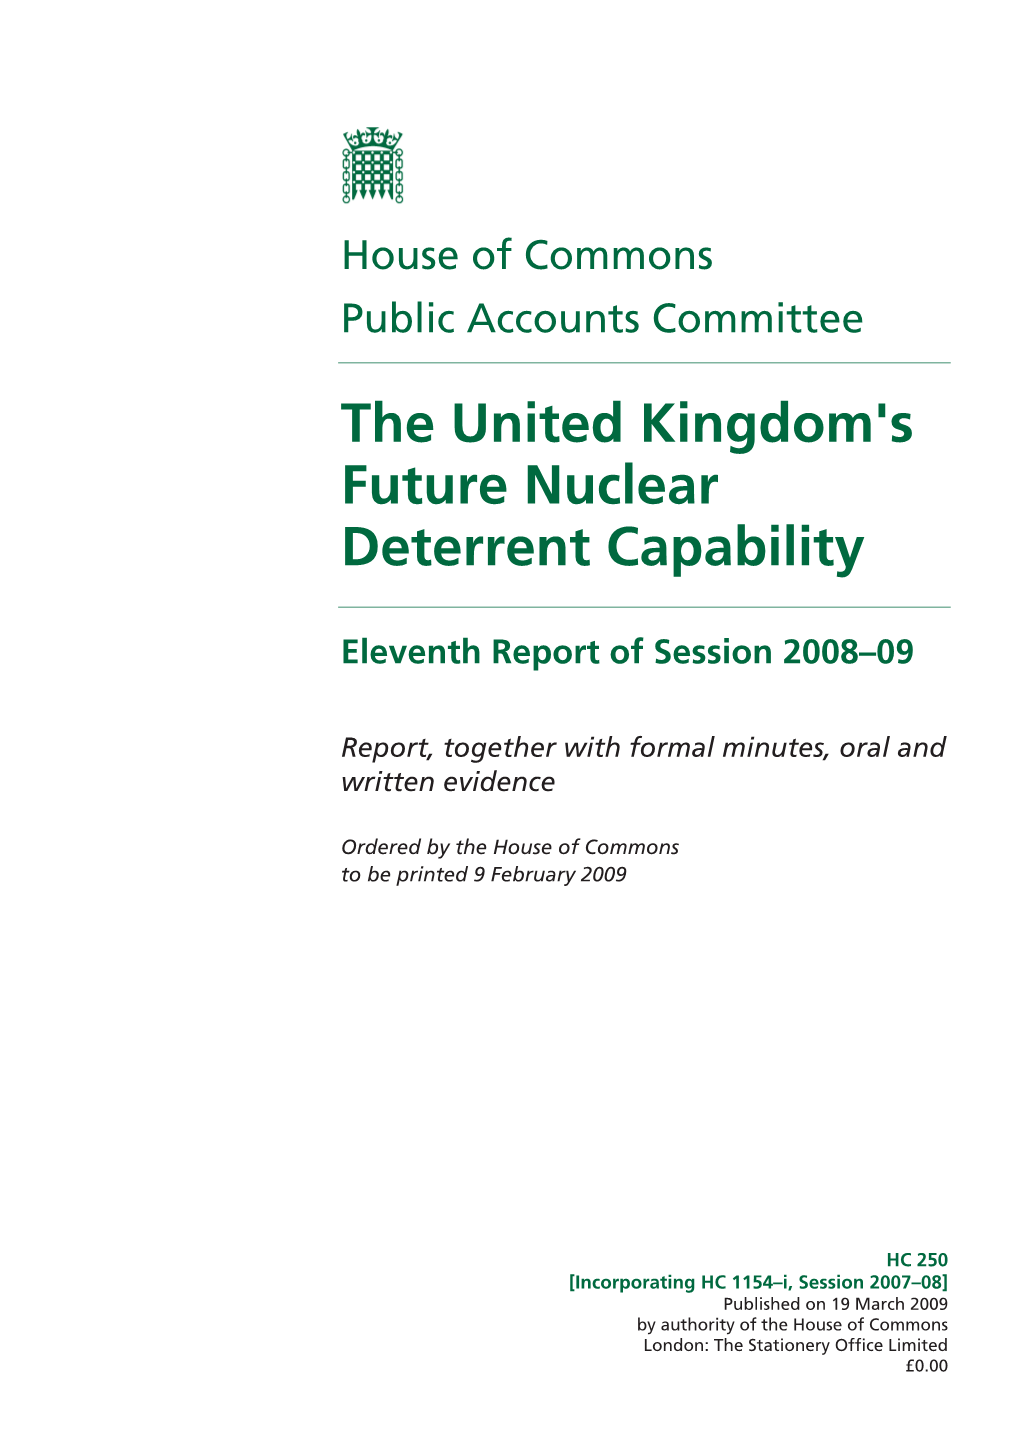 The United Kingdom's Future Nuclear Deterrent Capability